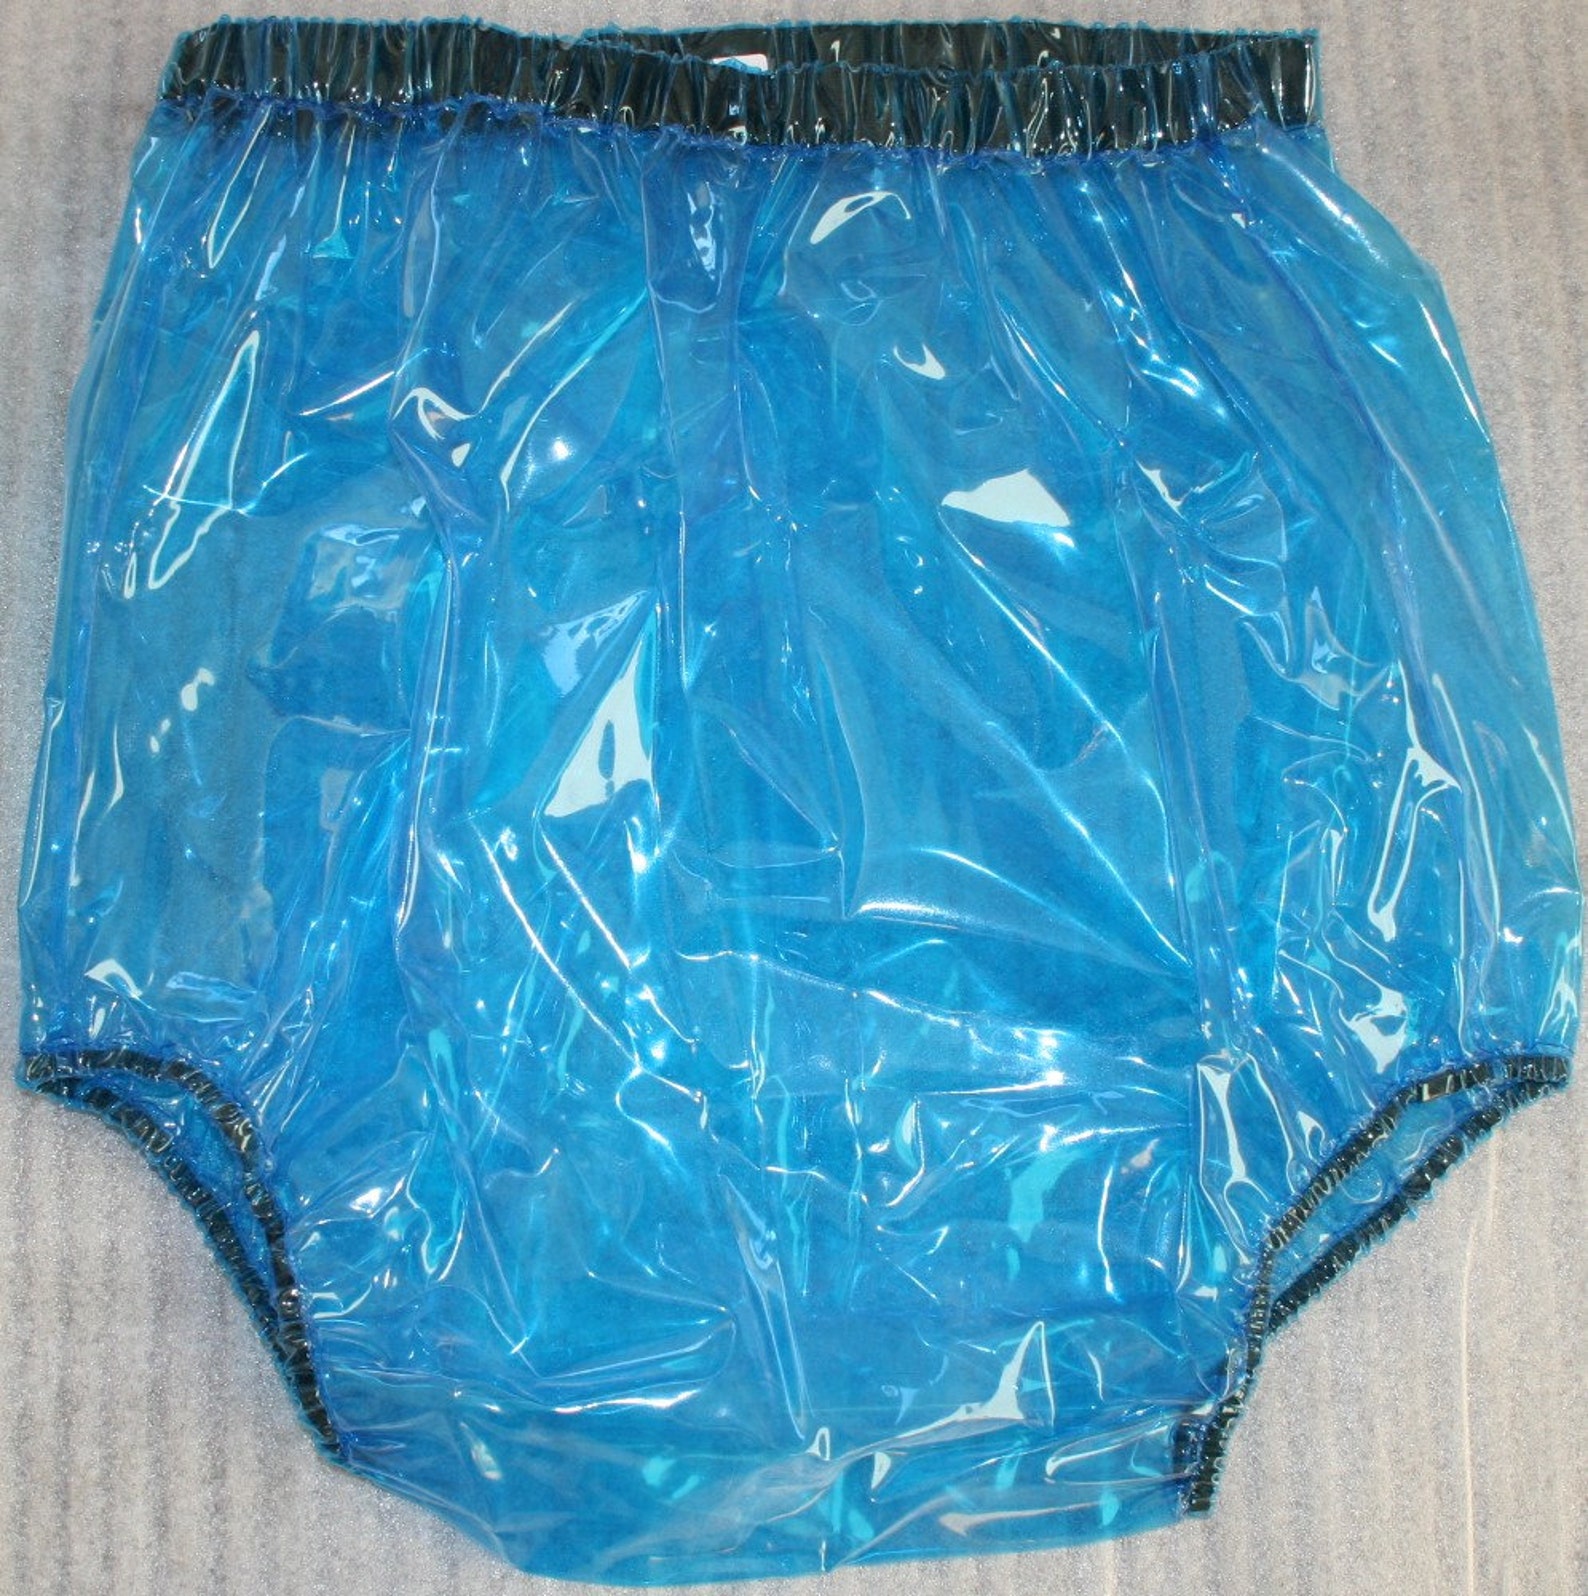 PVC Adult Baby Incontinence Diaper Pants Rubber Pants Blue | Etsy Australia